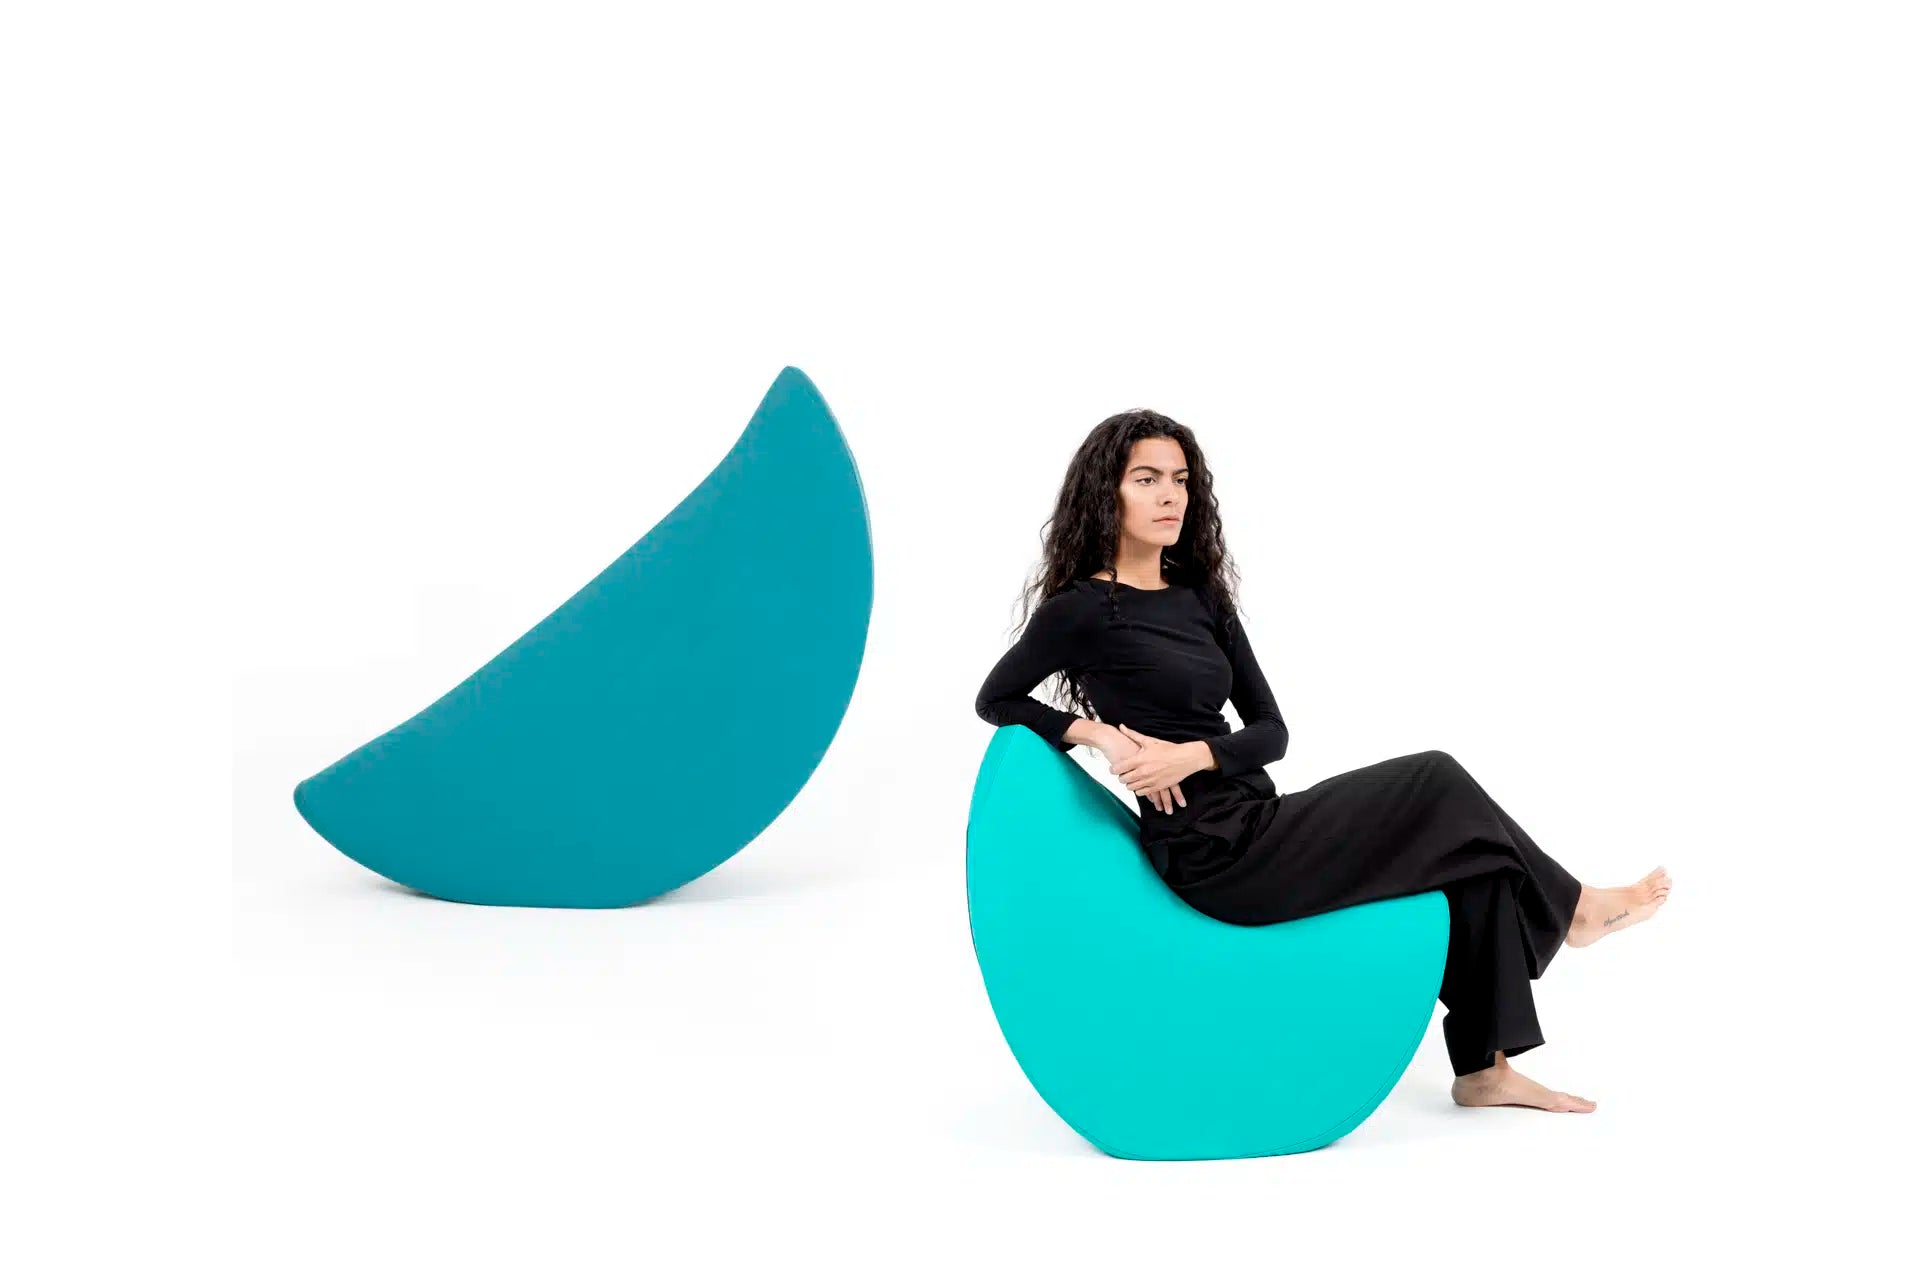 Clo armchair - Campeggi design